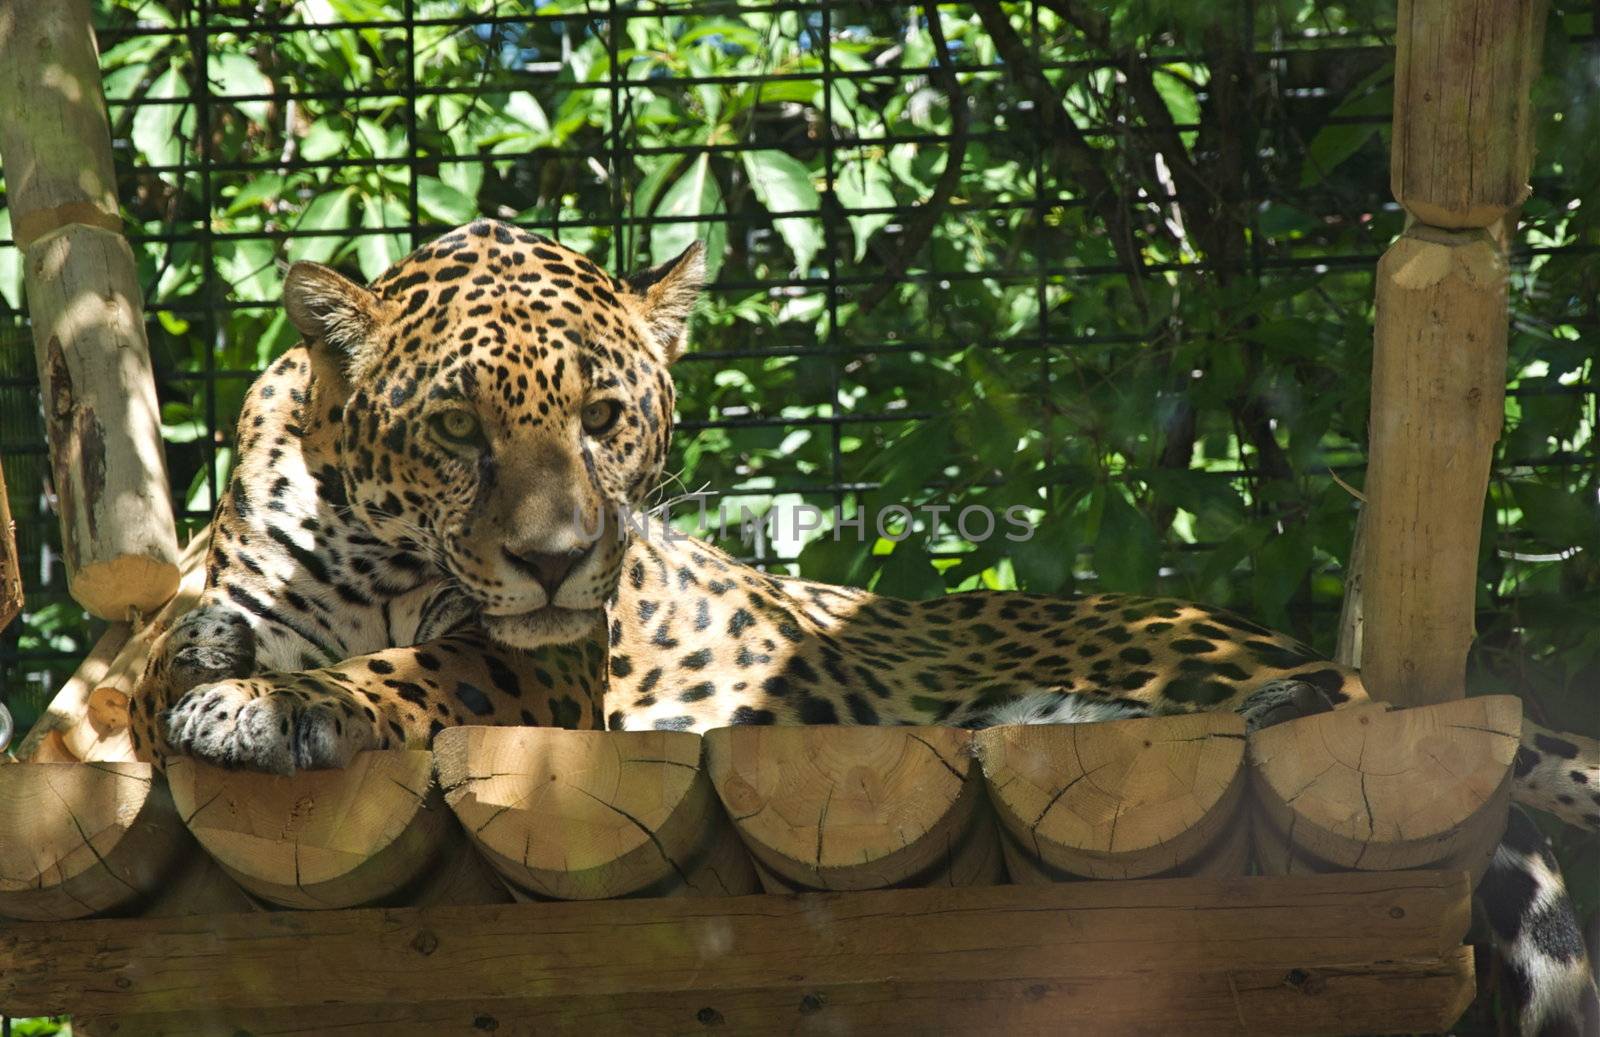 A jaguar rests at the Denver Zoo.